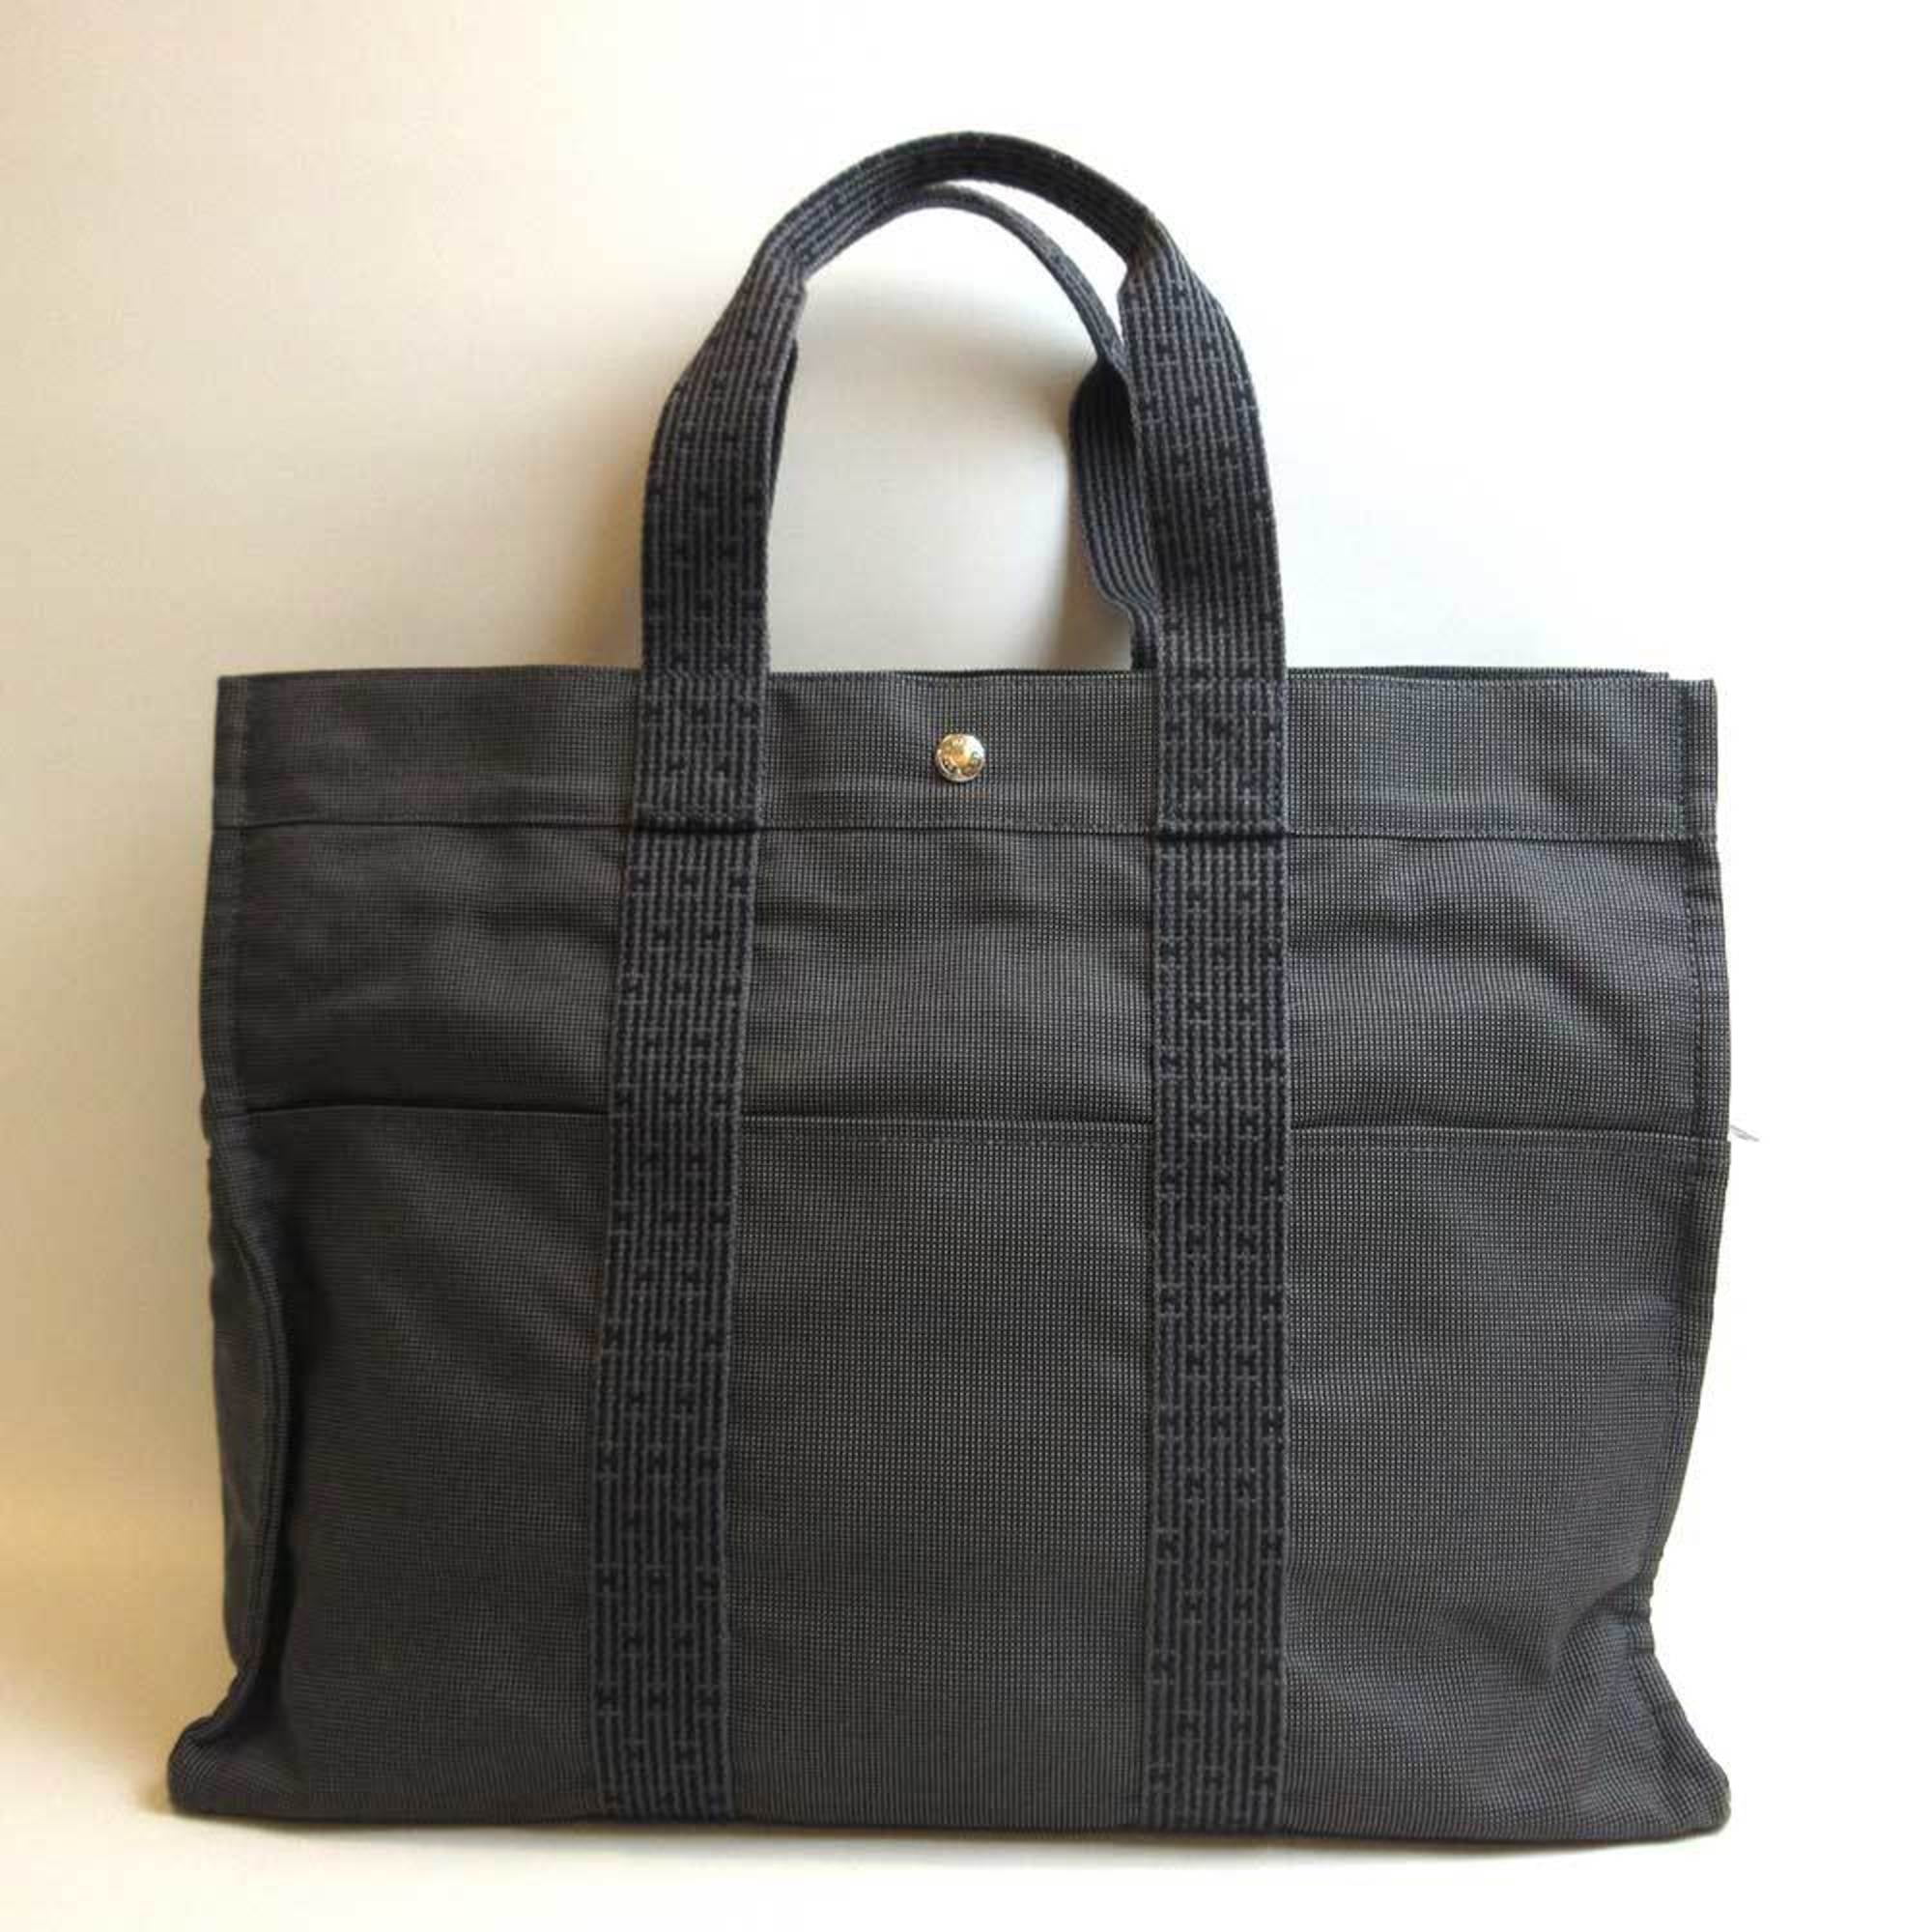 Authenticated Used Hermes Bag Yale Line Tote GM Gray Handbag